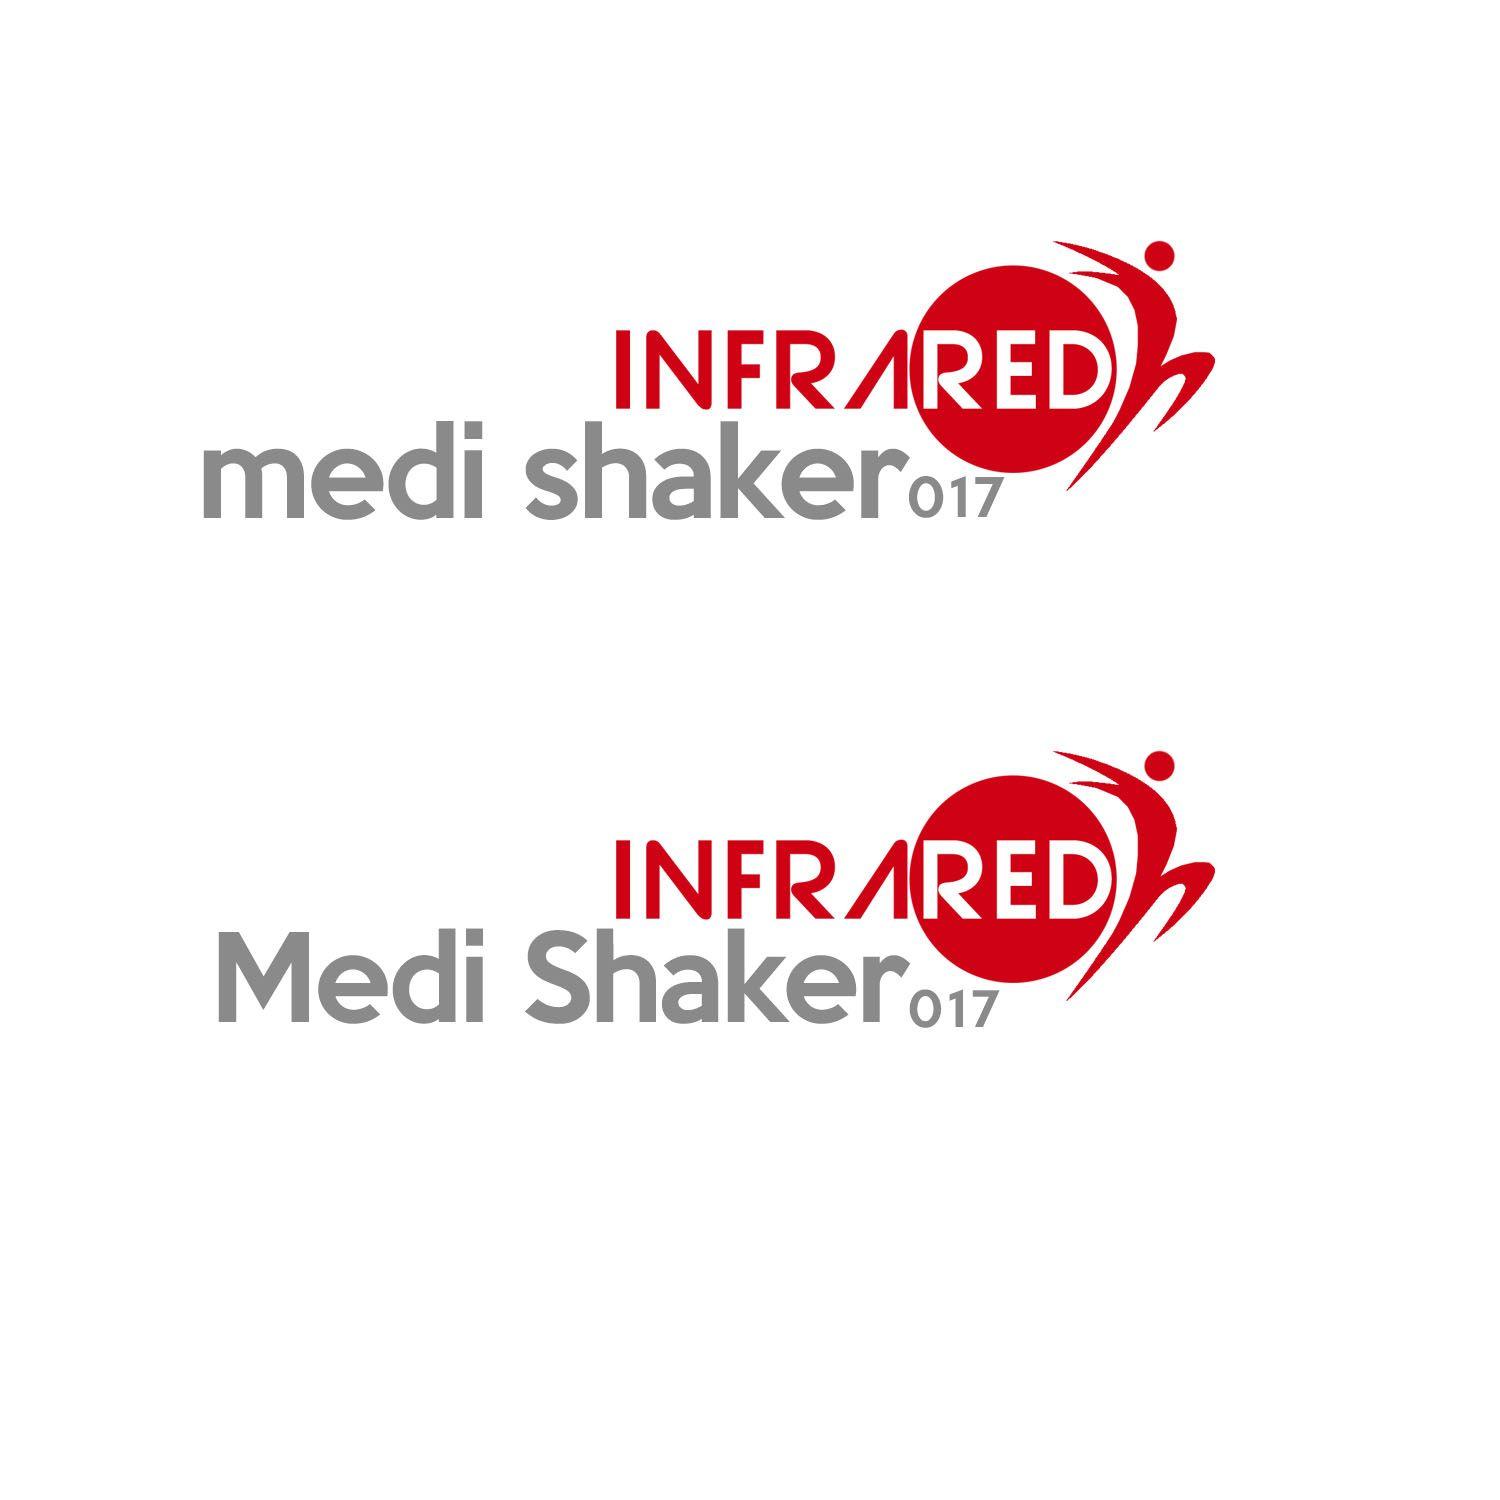 Infrared Logo - Modern, Masculine, Health And Wellness Logo Design for infrared medi